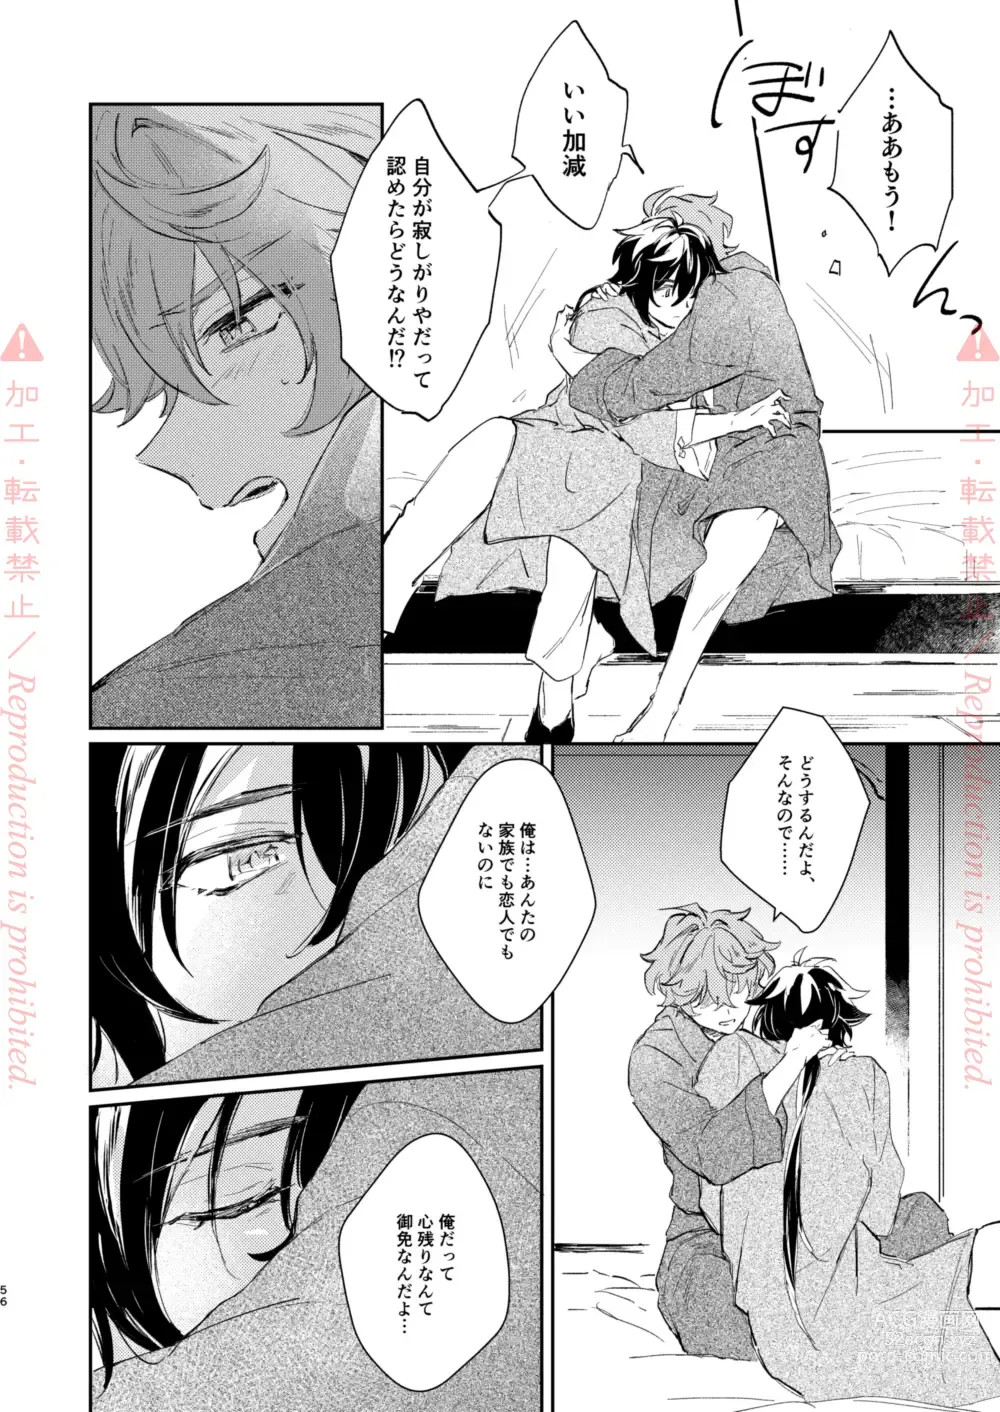 Page 55 of doujinshi Hatsuro